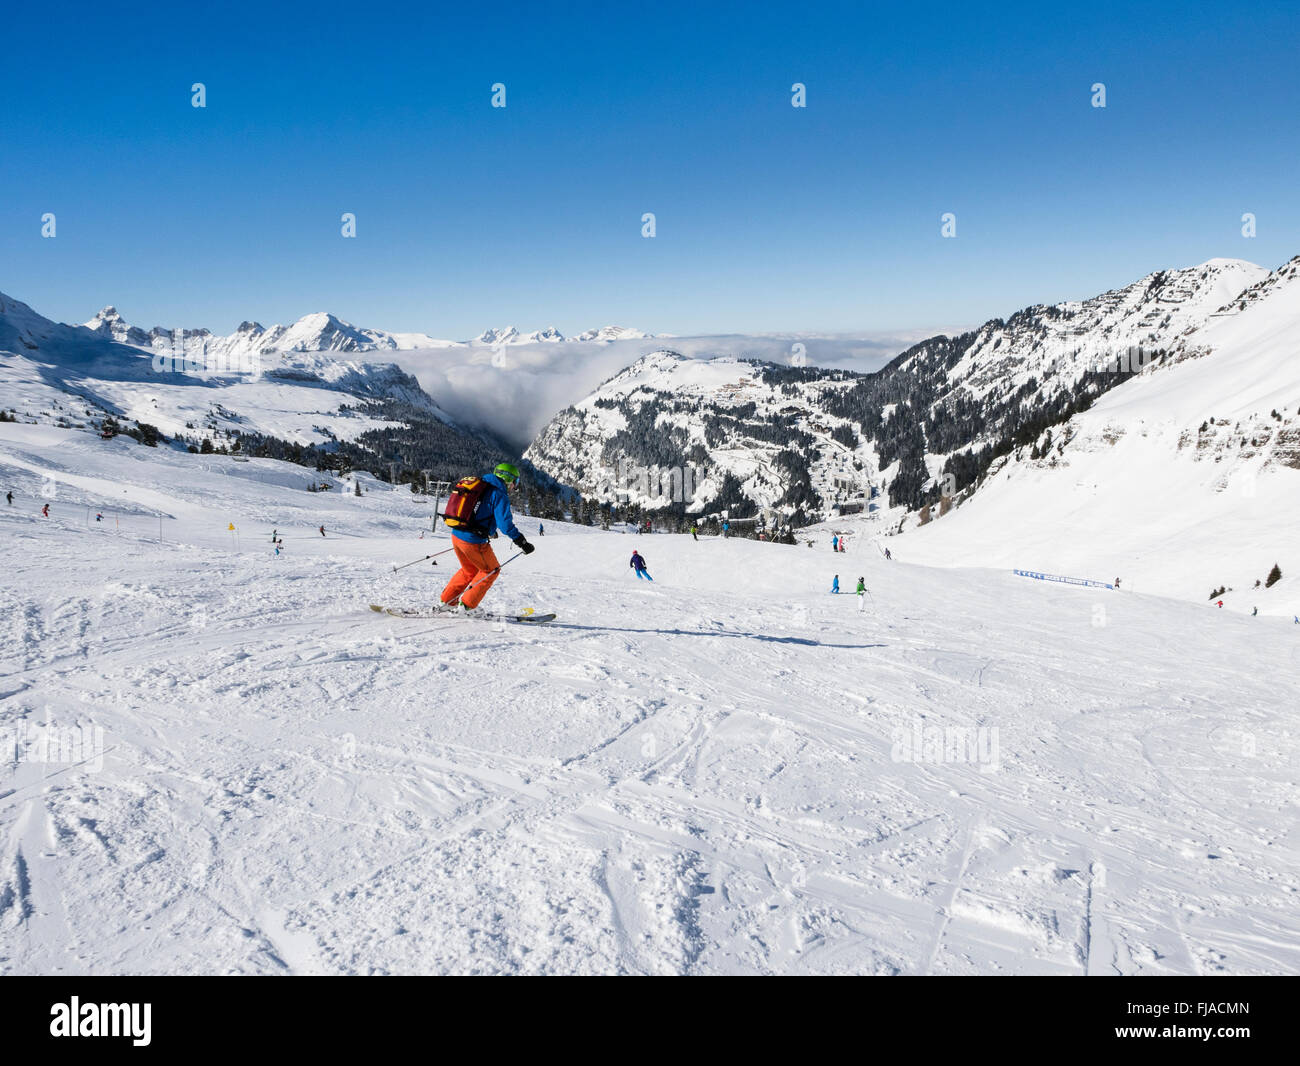 Flaine ski resort fotografías e imágenes de alta resolución - Alamy